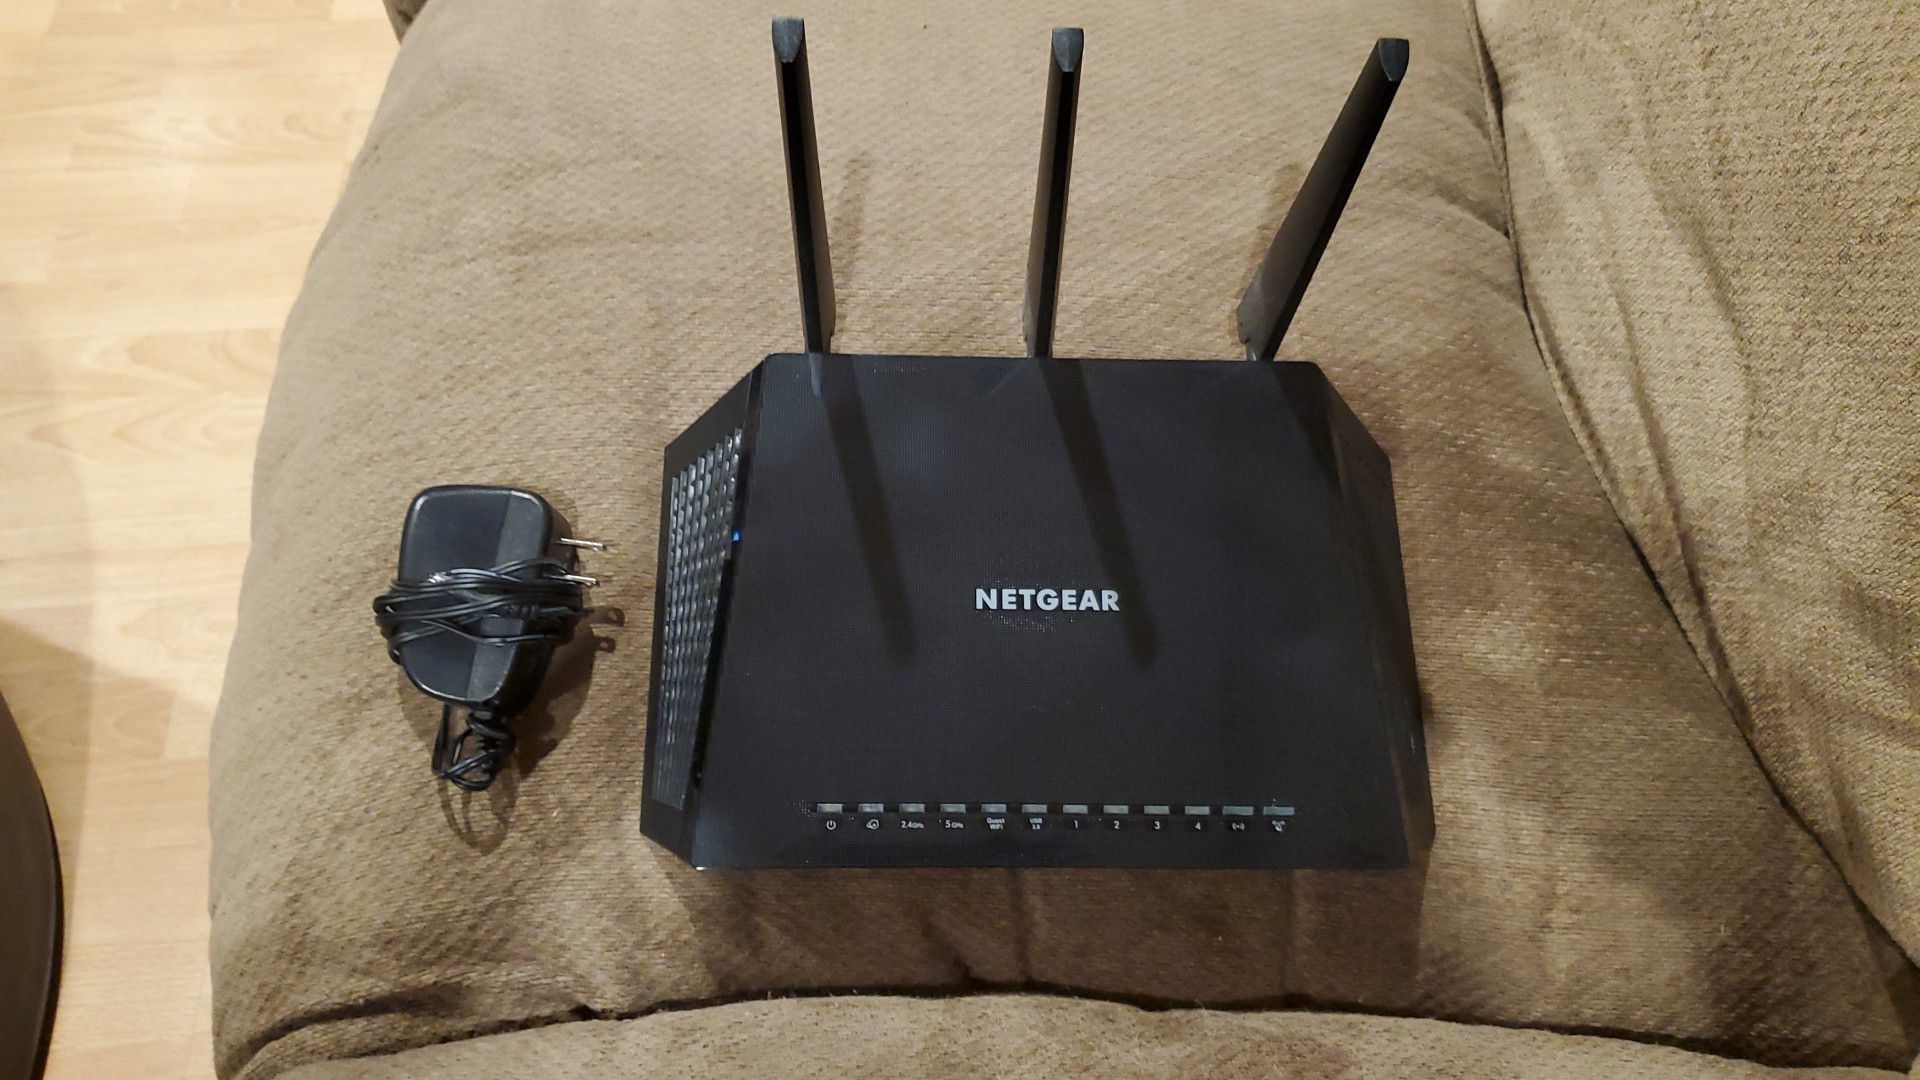 Nighthawk AC2600 Smart Wifi Router